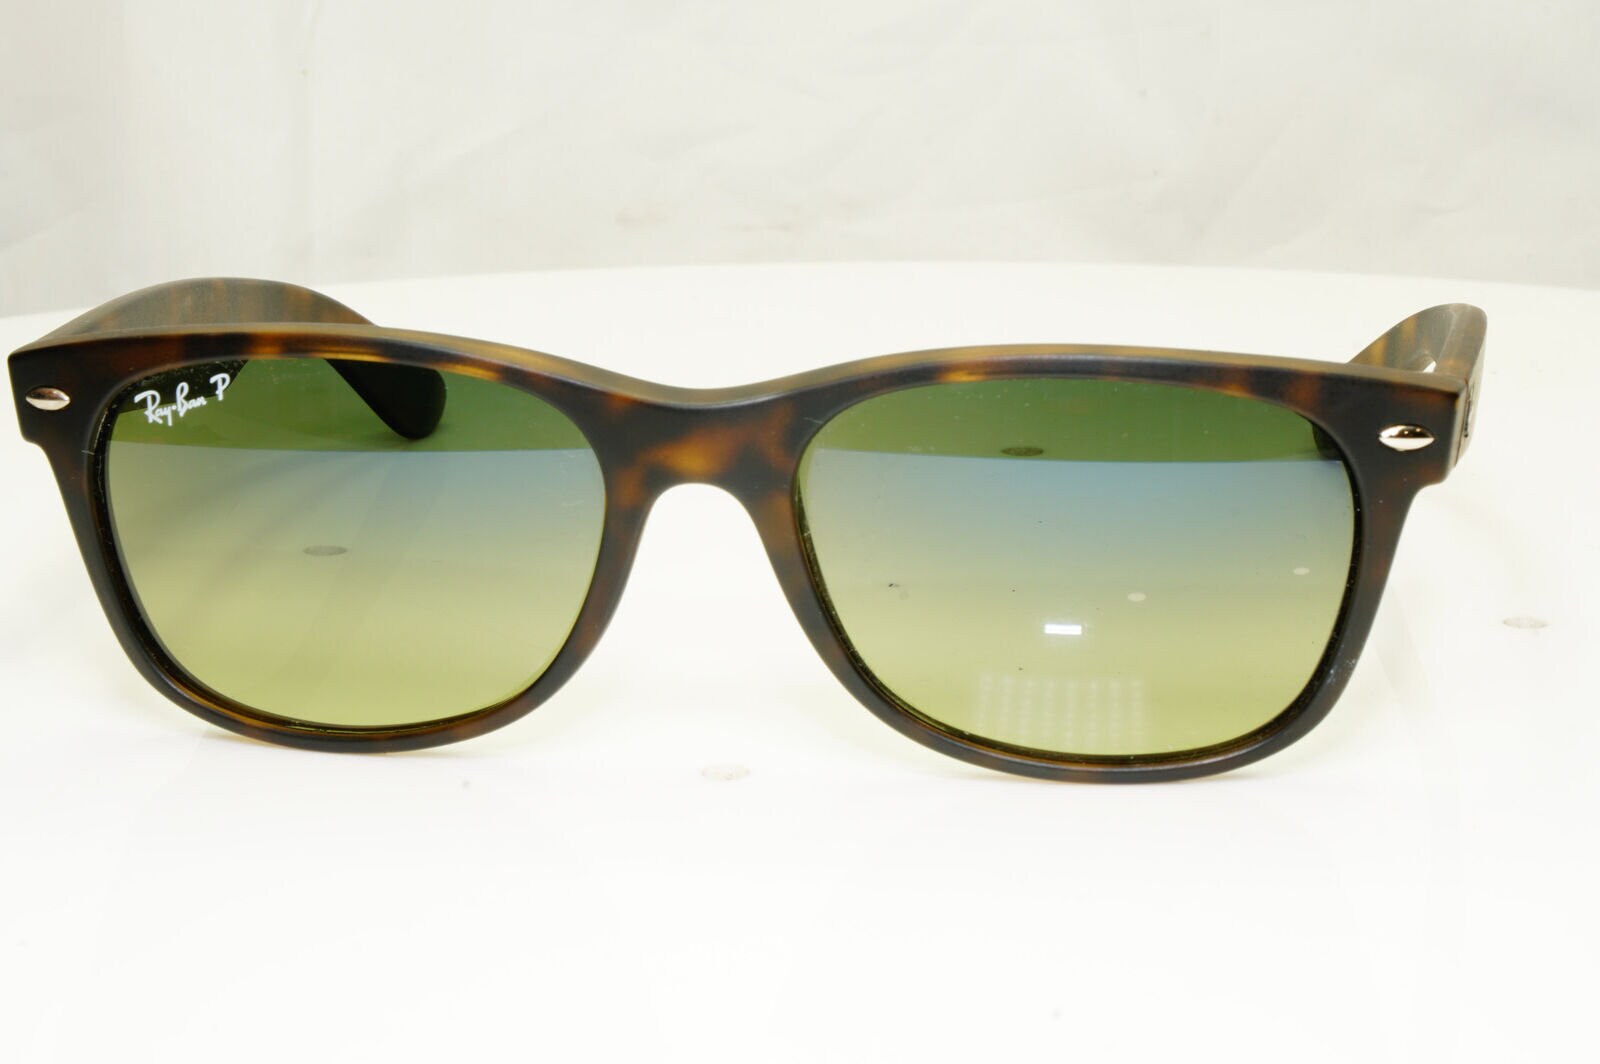 Authentic Ray-Ban Polarized Sunglasses Rb 2132 New Wayfarer | Etsy